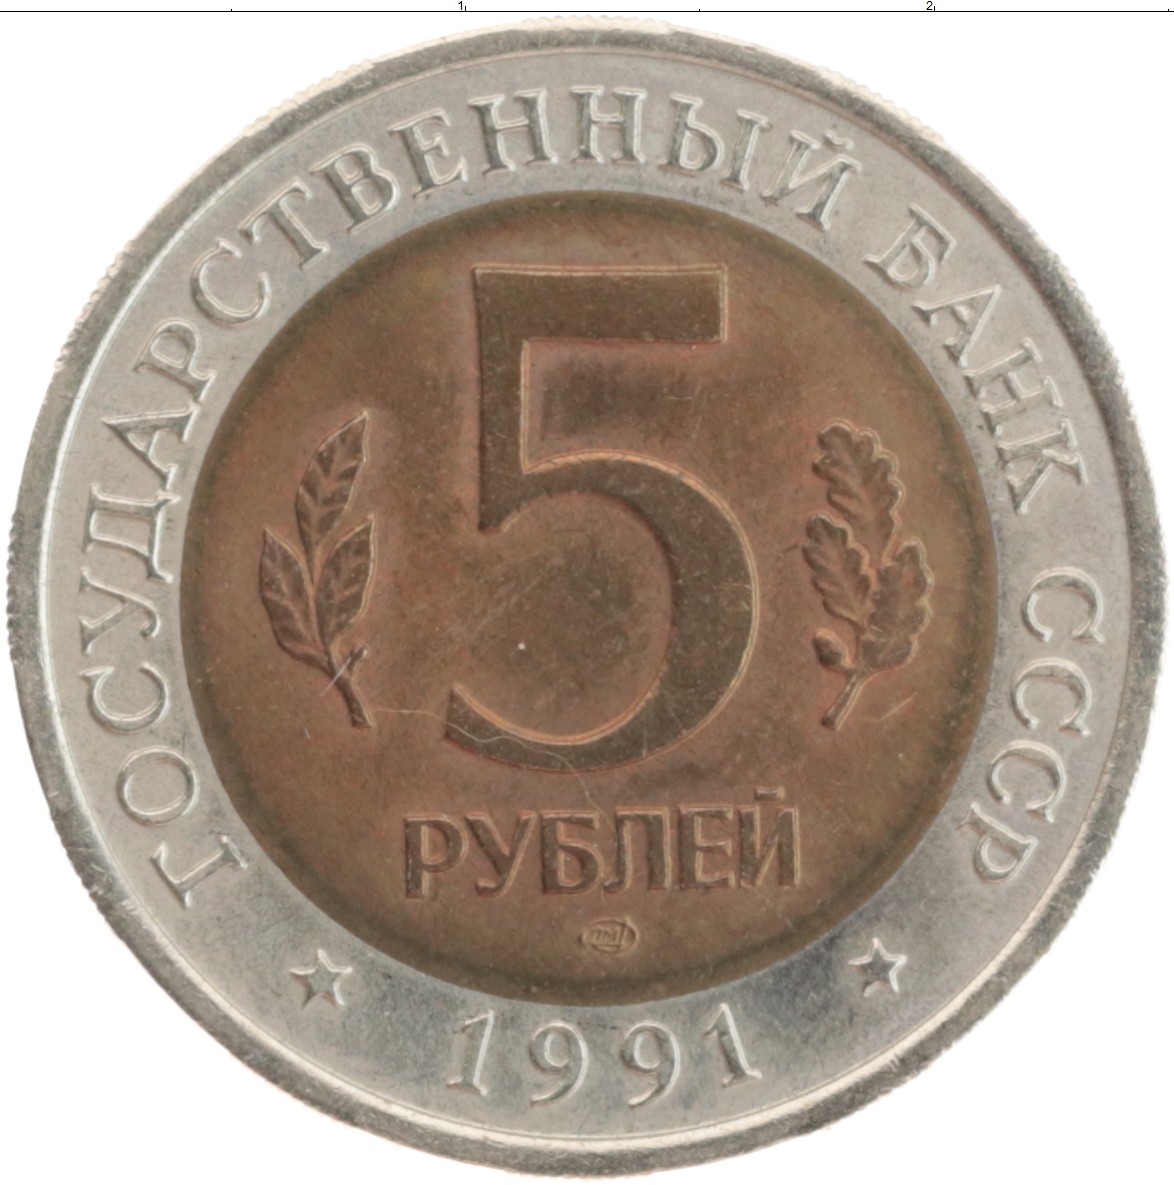 Цена 5 рублей со. 5к 1991 Биметалл. Монета 5 рублей 1991 года. Биметаллическая монета 5 рублей. Монета СССР Биметалл.